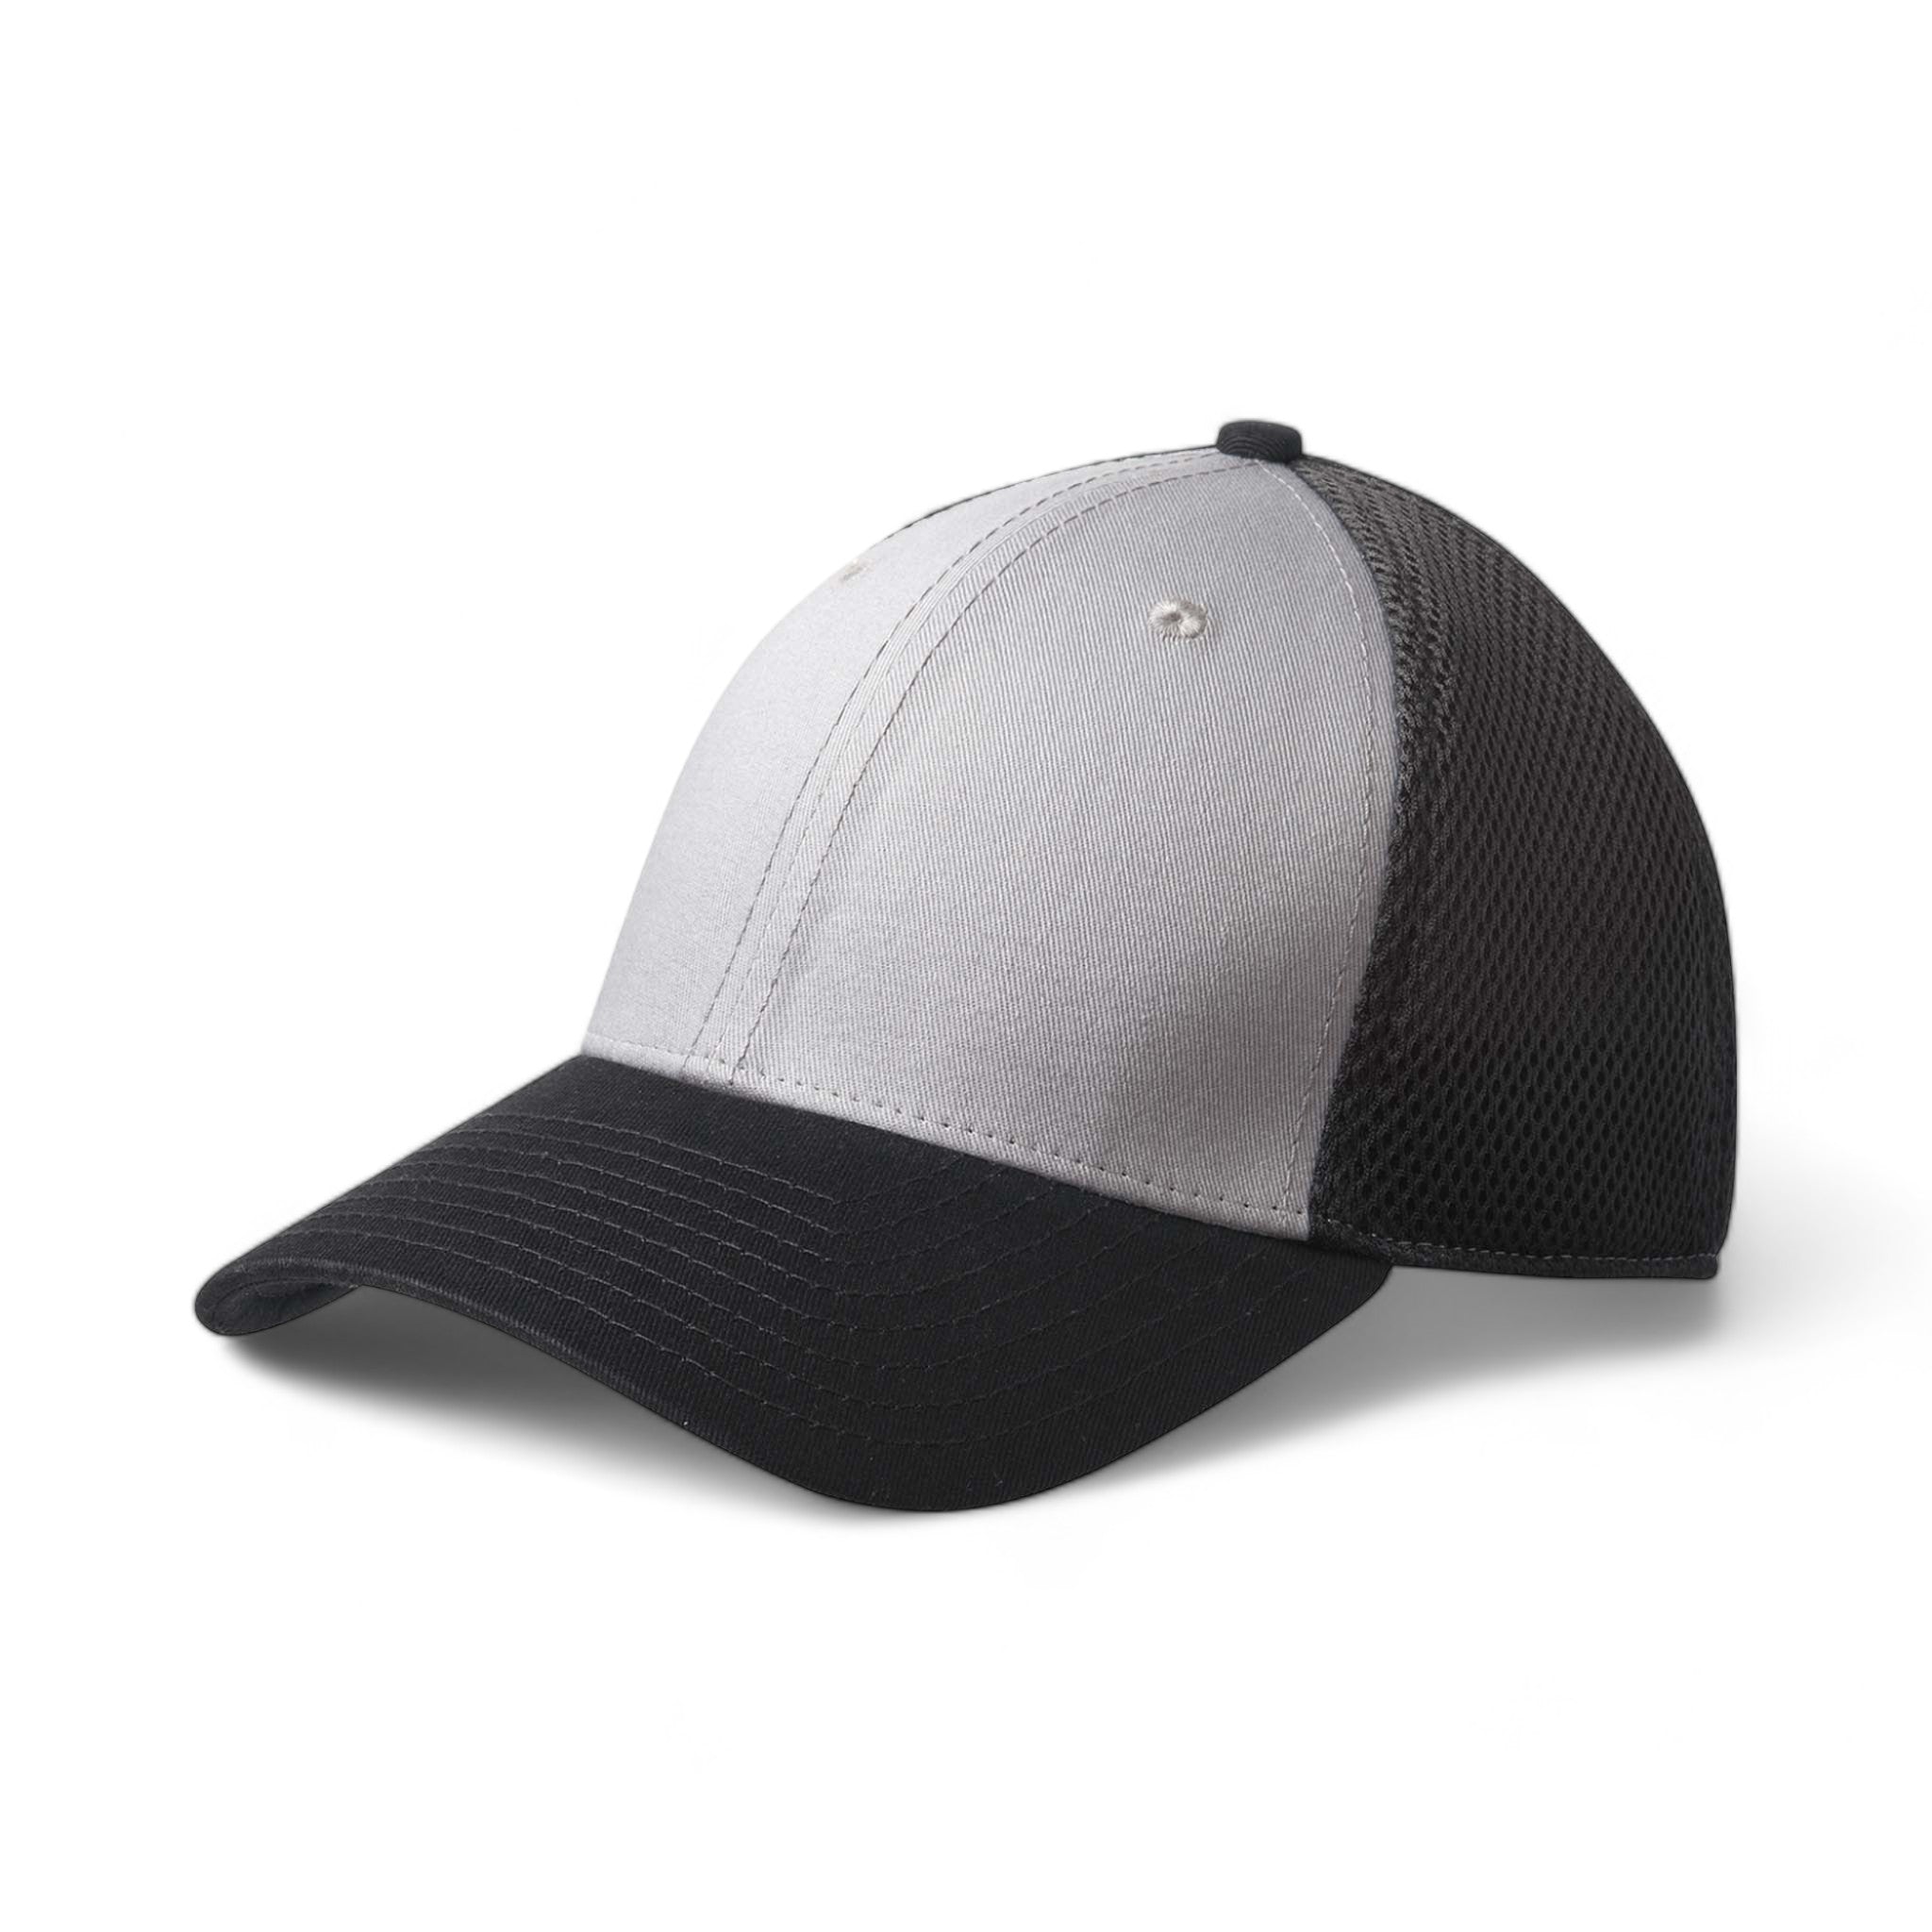 Side view of New Era NE1020 custom hat in grey and black